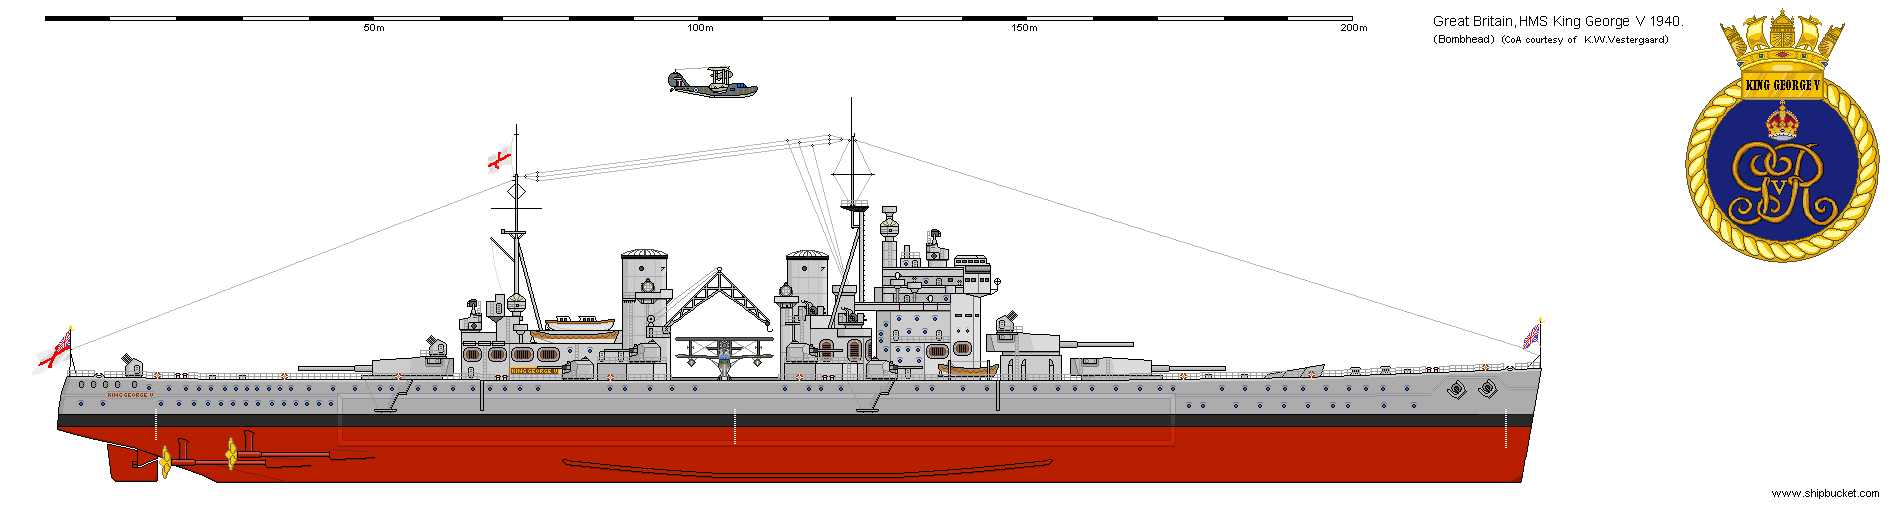 King George V - via shipbucket, by Bombhead, cc license